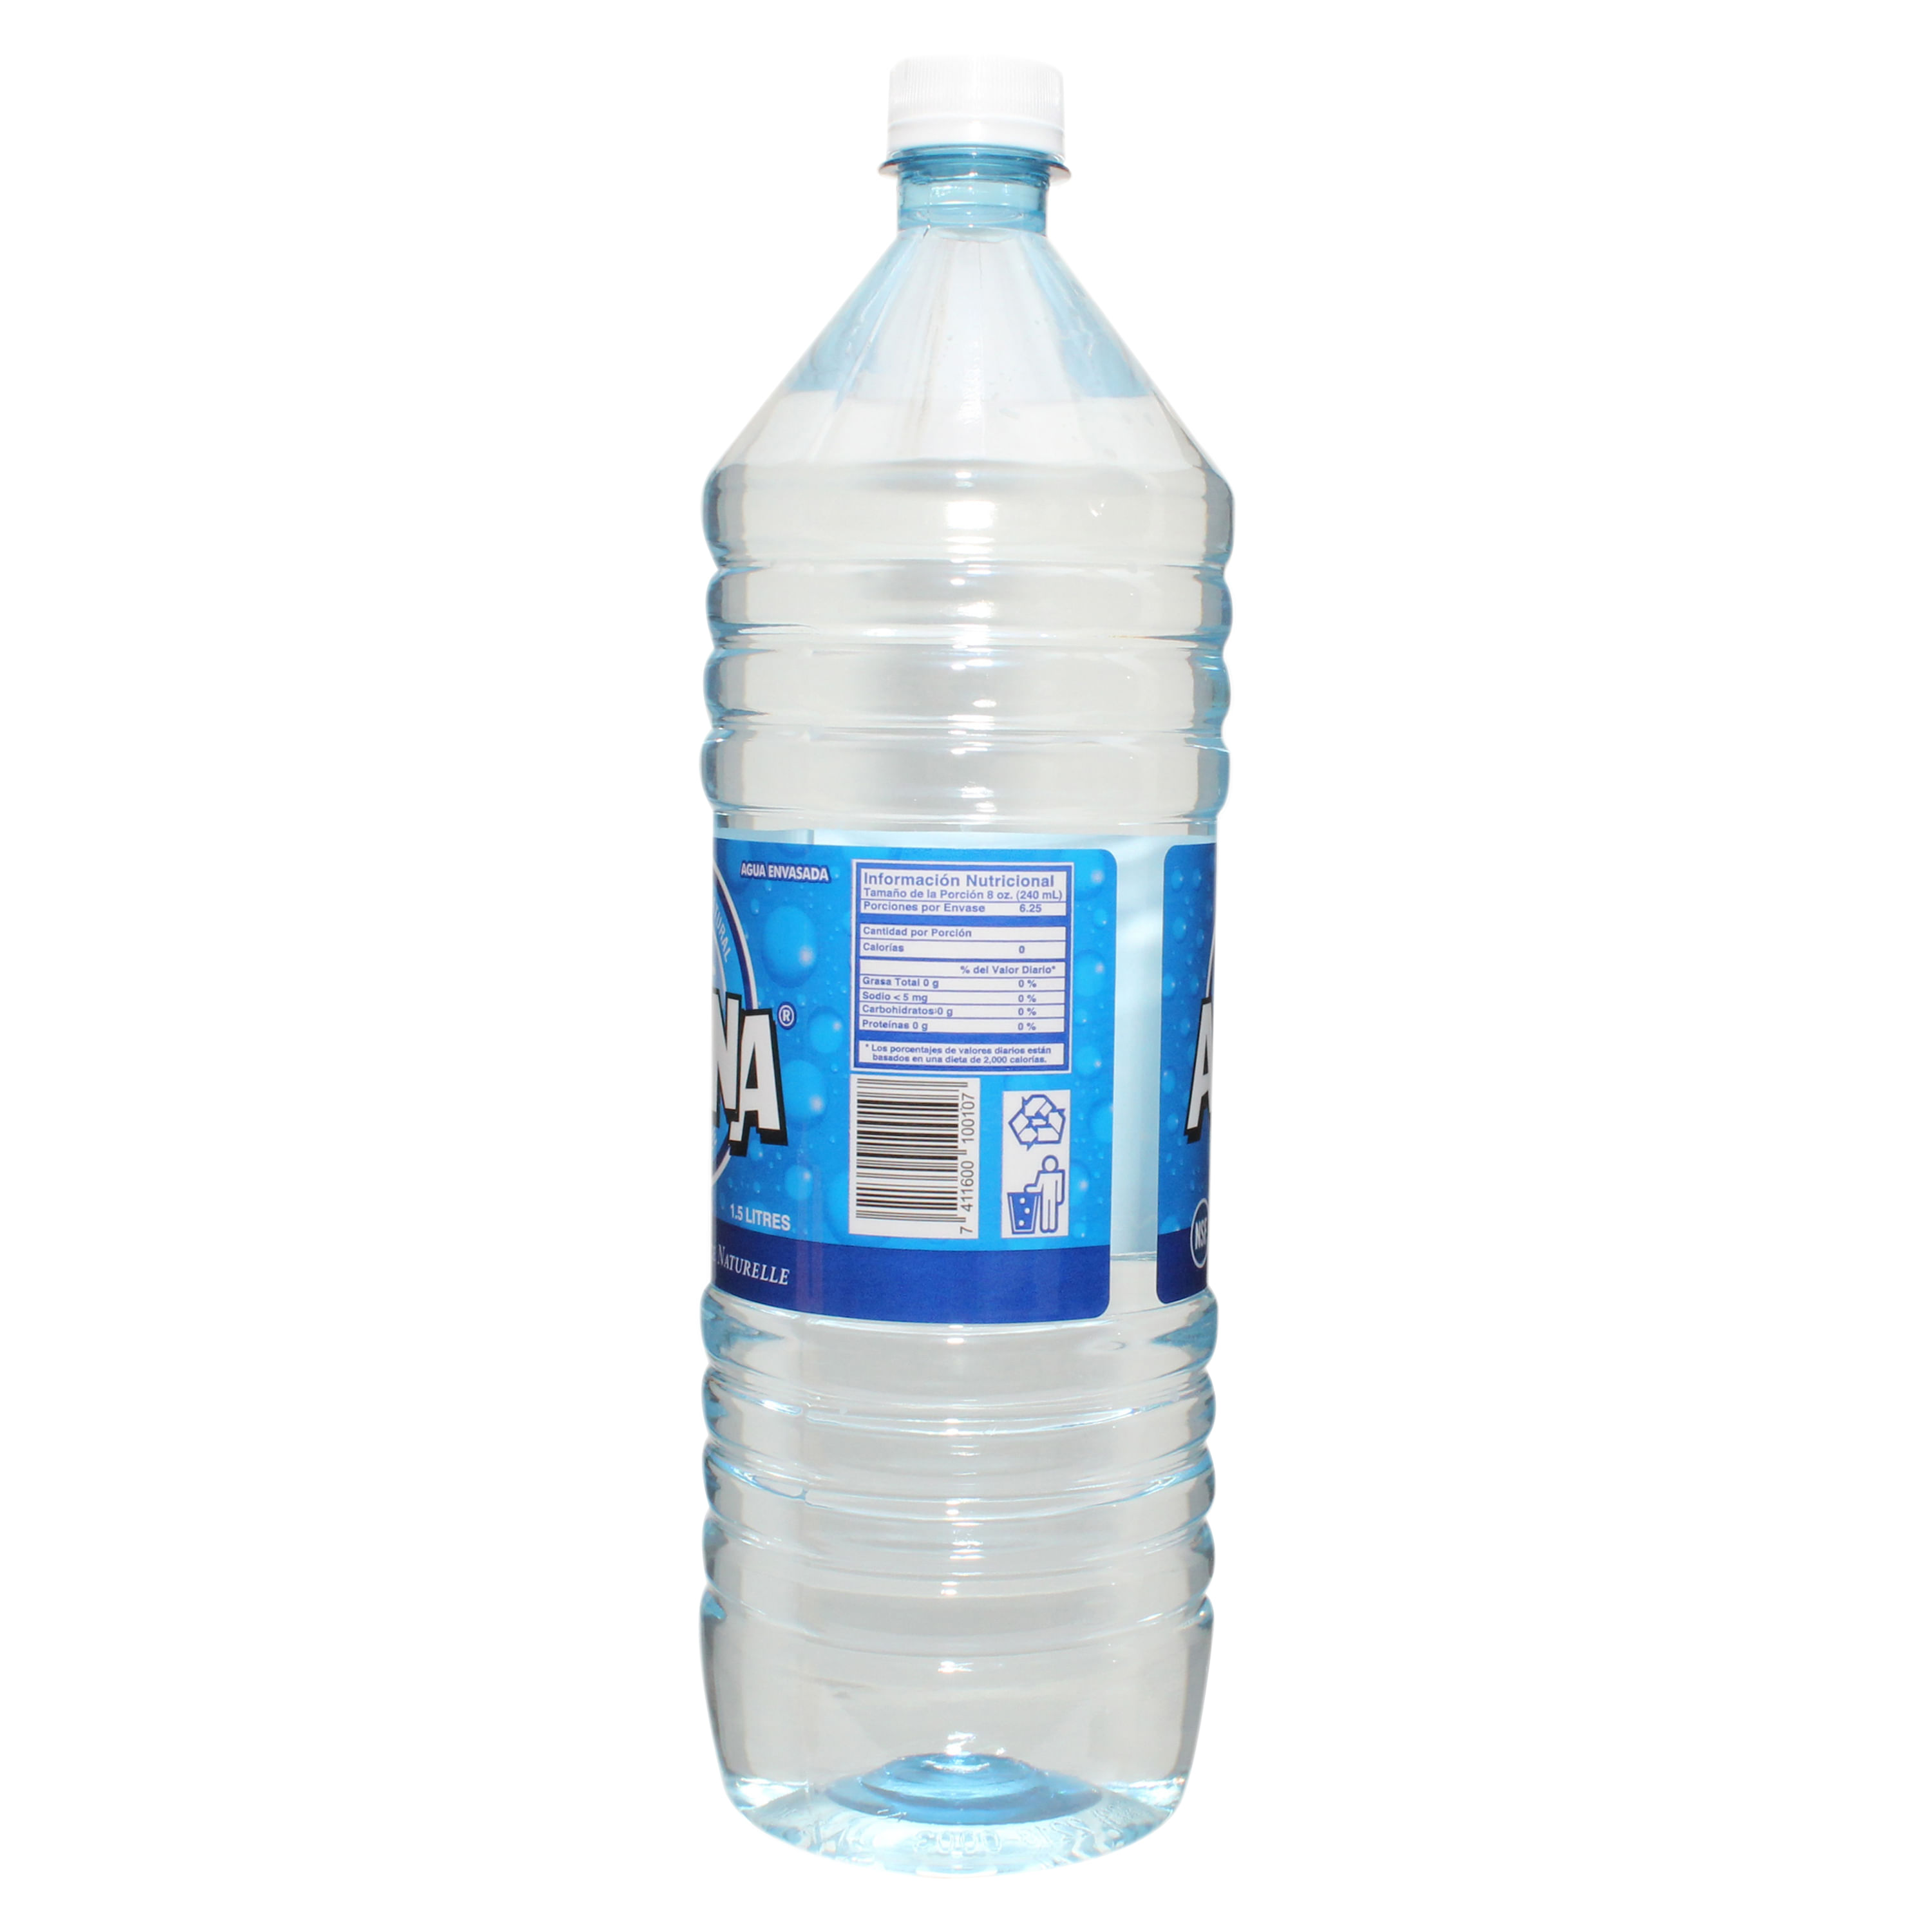 Supermercado online: compra agua: Agua alpina